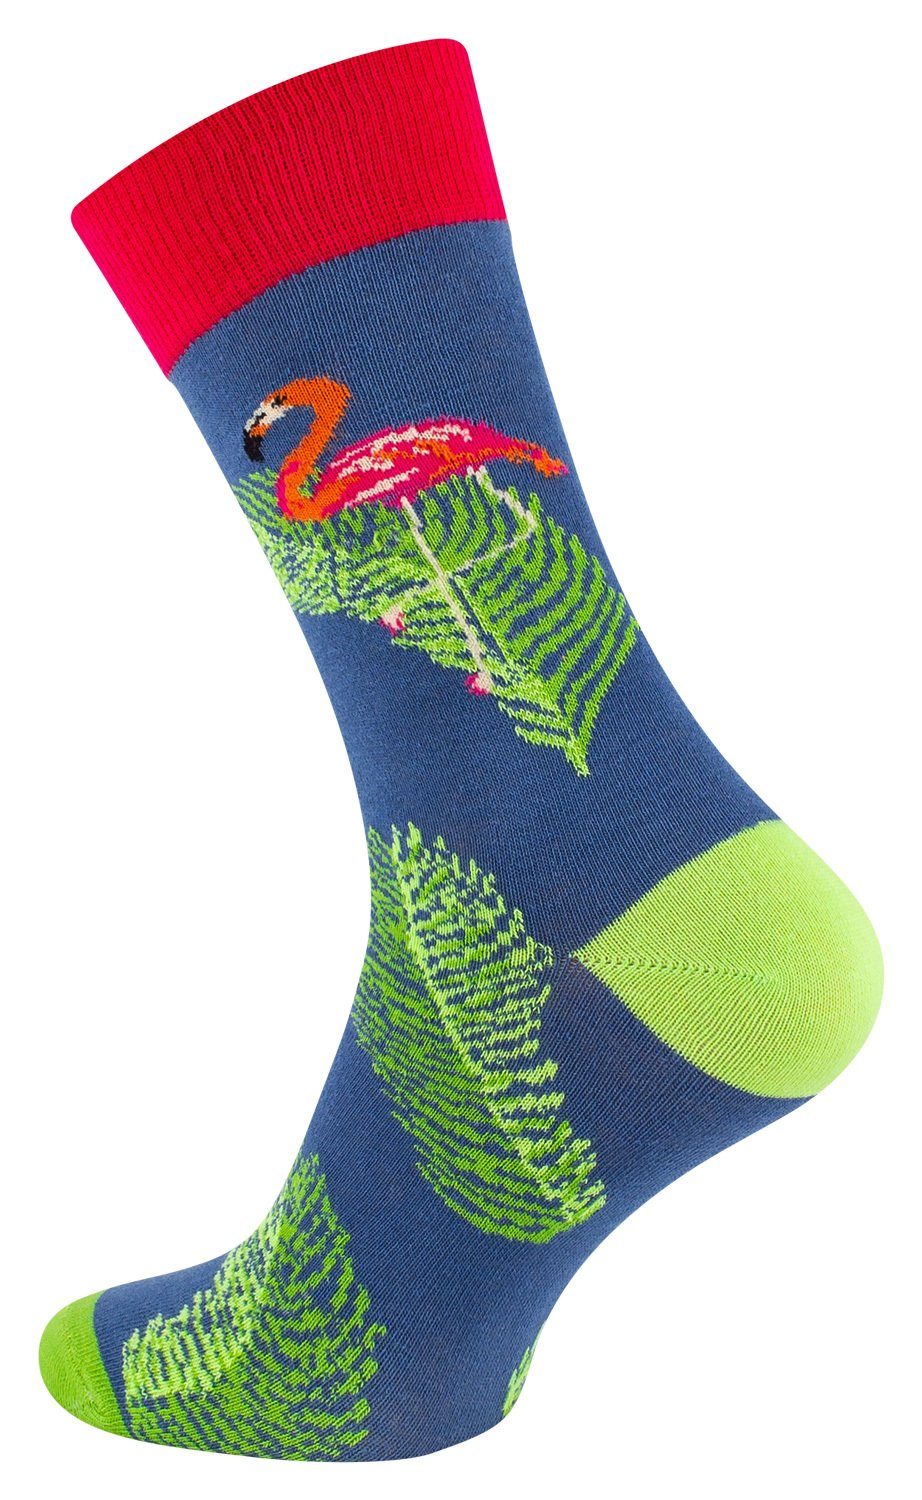 mit HawaiiFlamingo Motiven lustigen Socken bunten Vincent Creation®